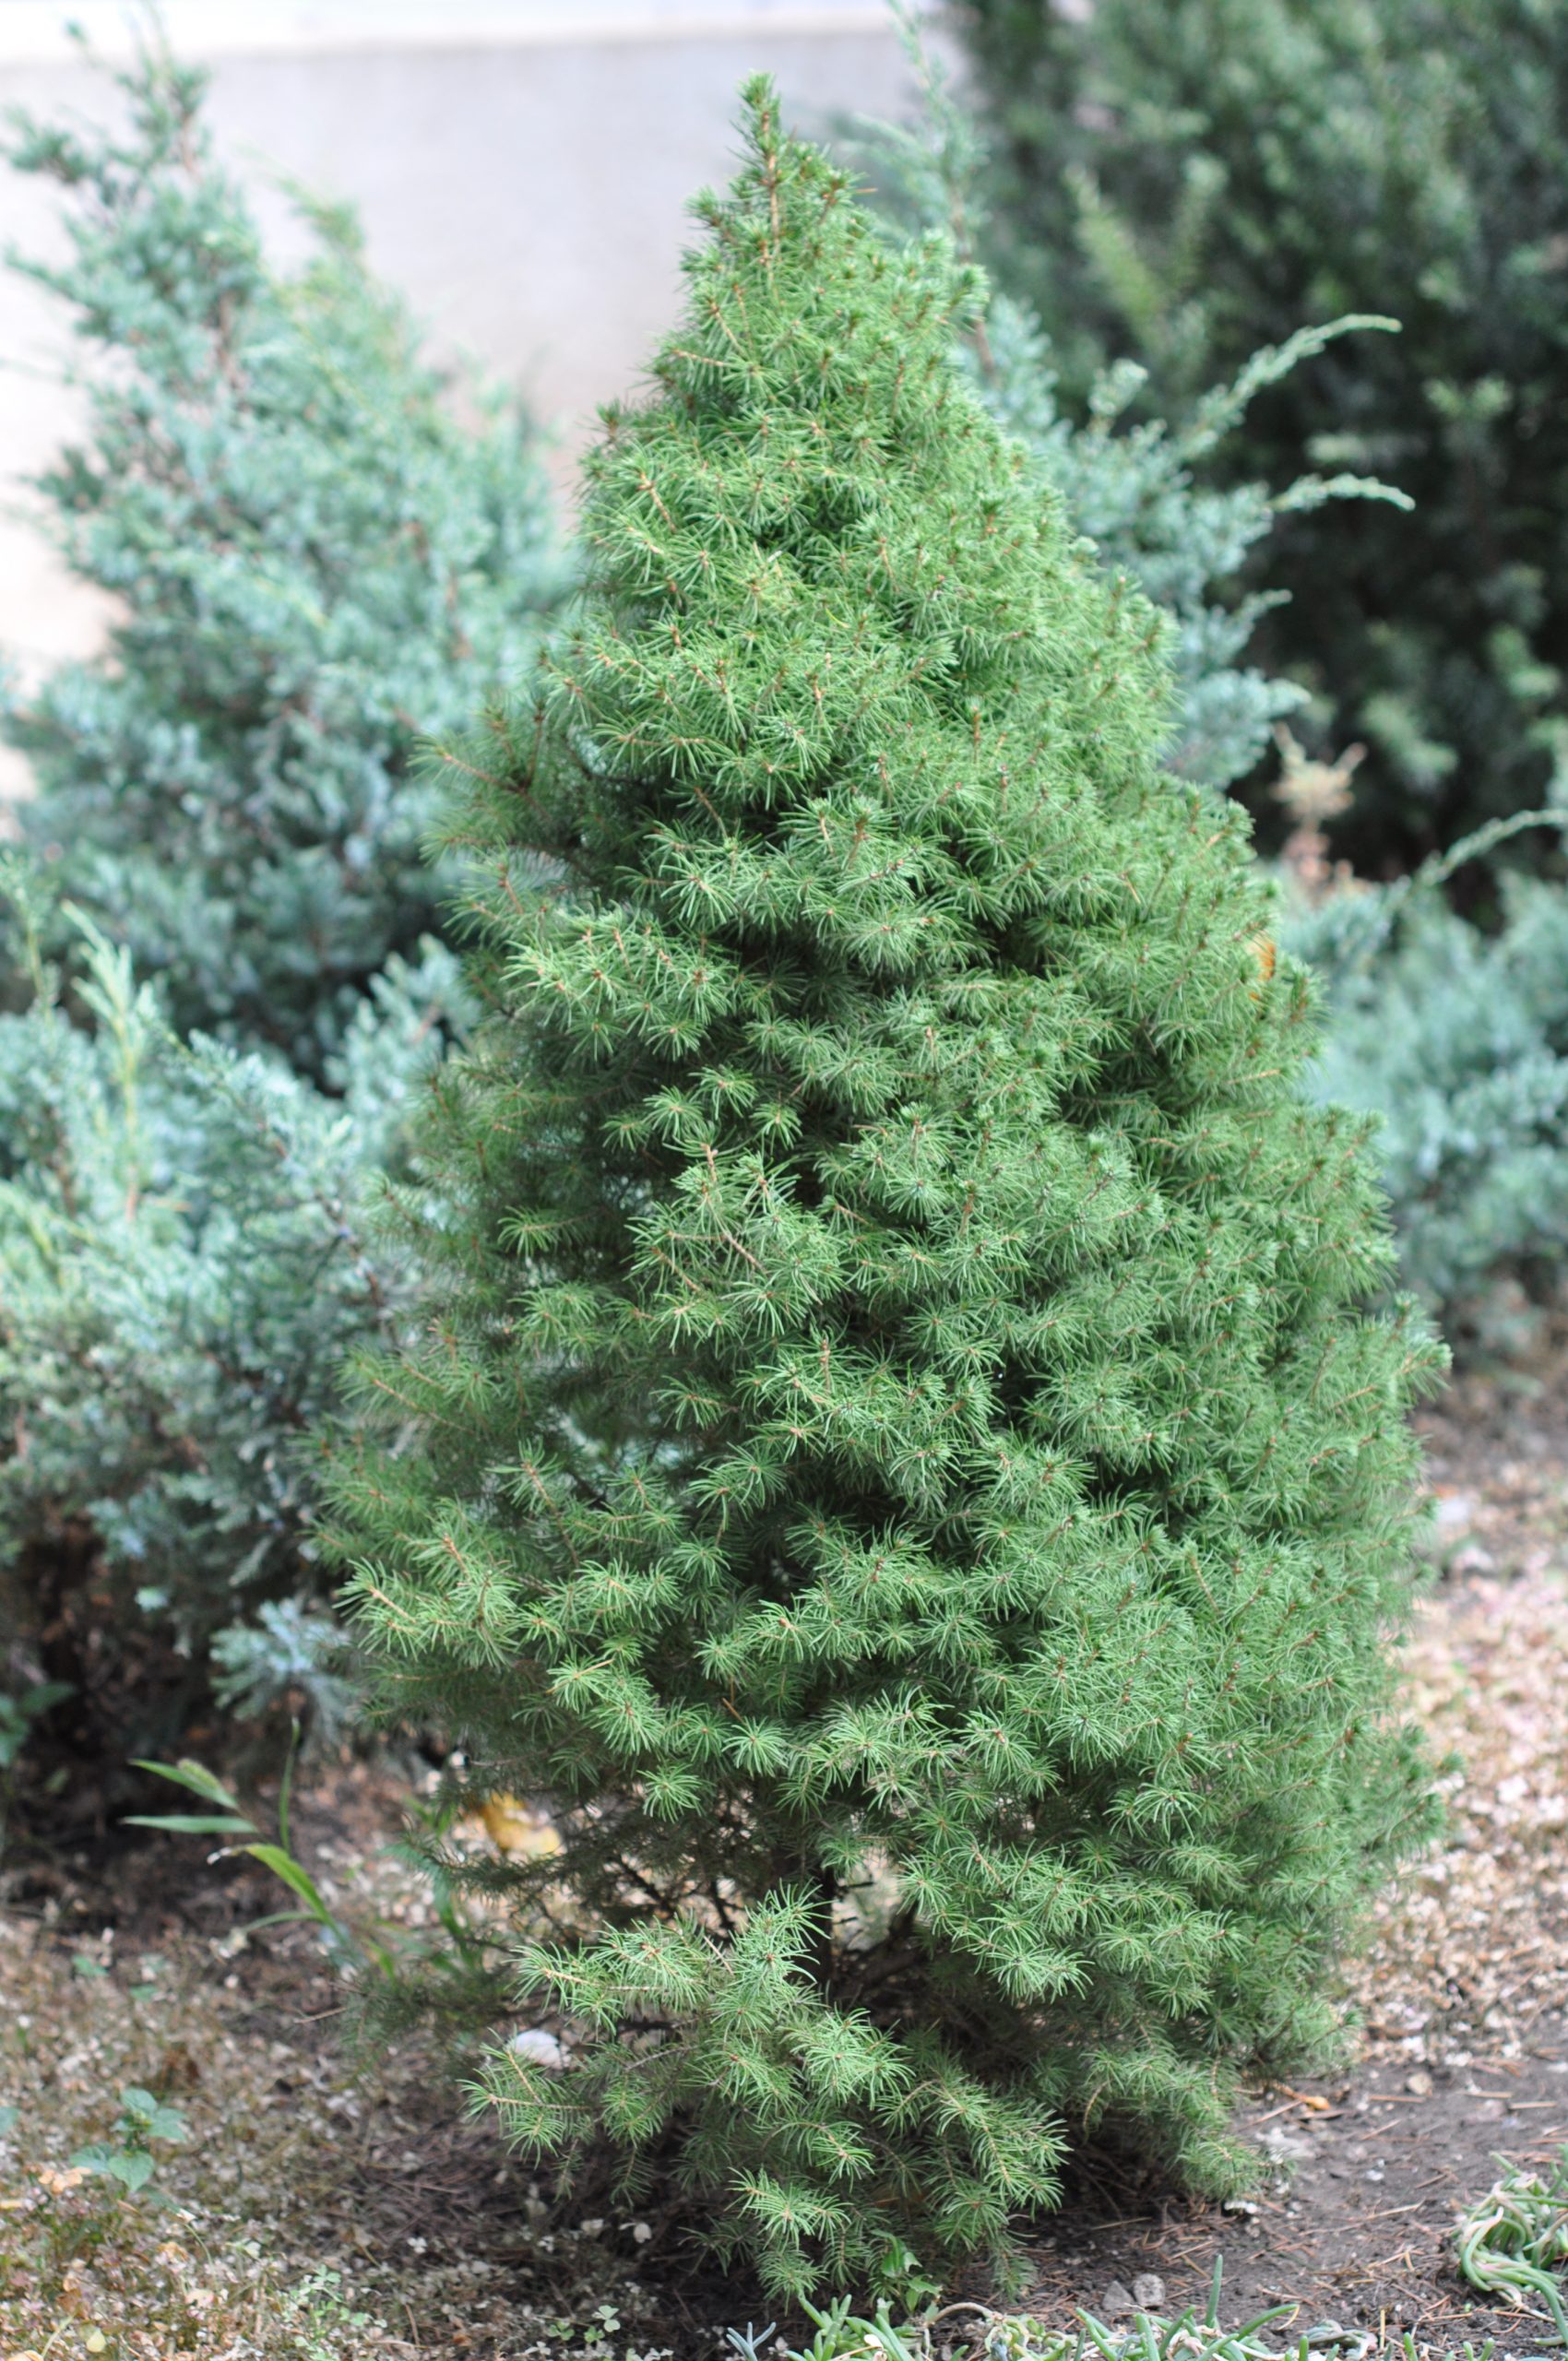 Dwarf Alberta Spruce (Picea glauca)